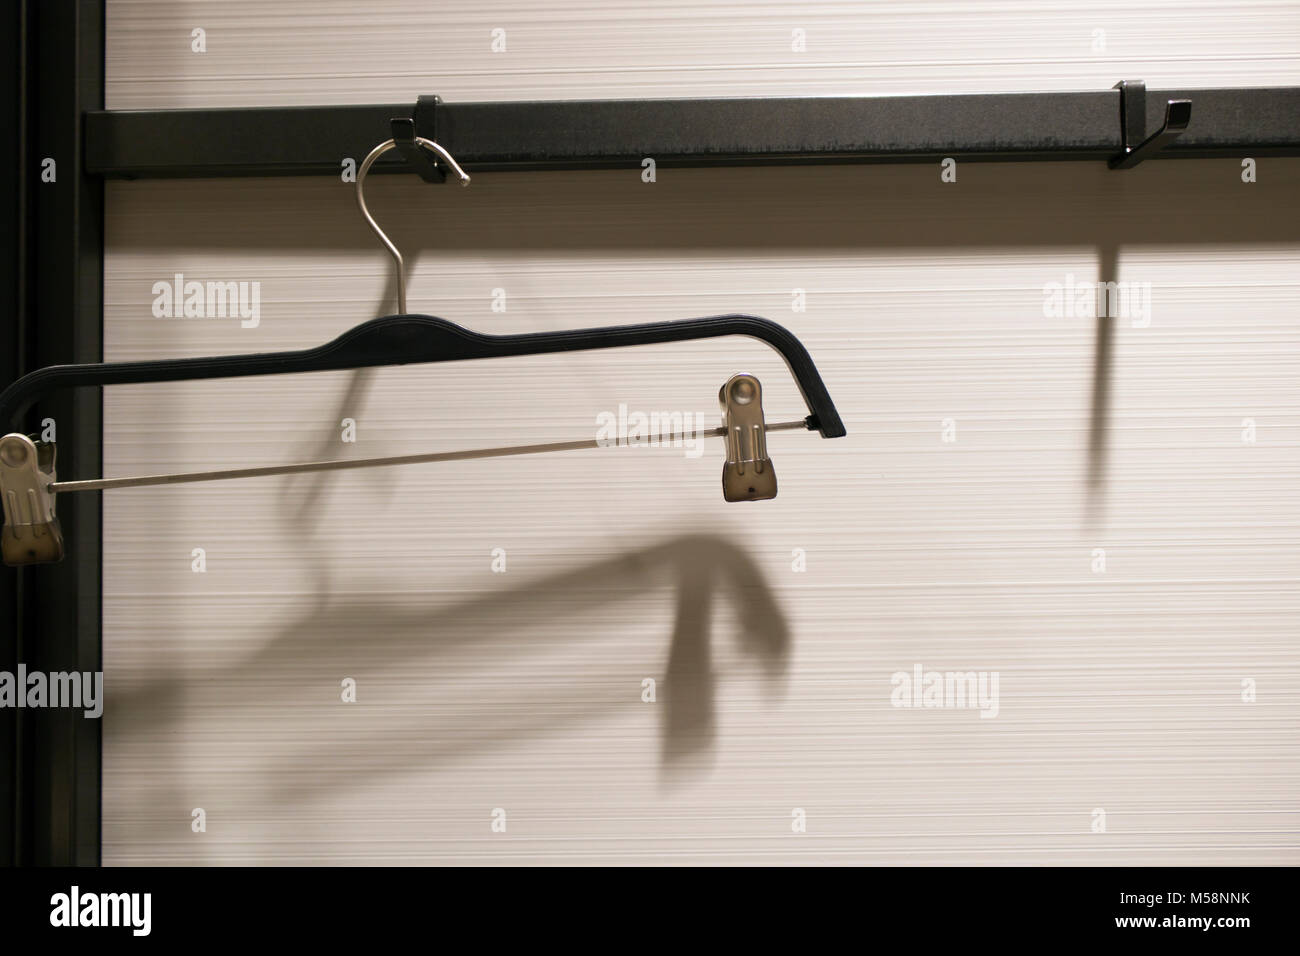 Clothes hanger Stock Photo